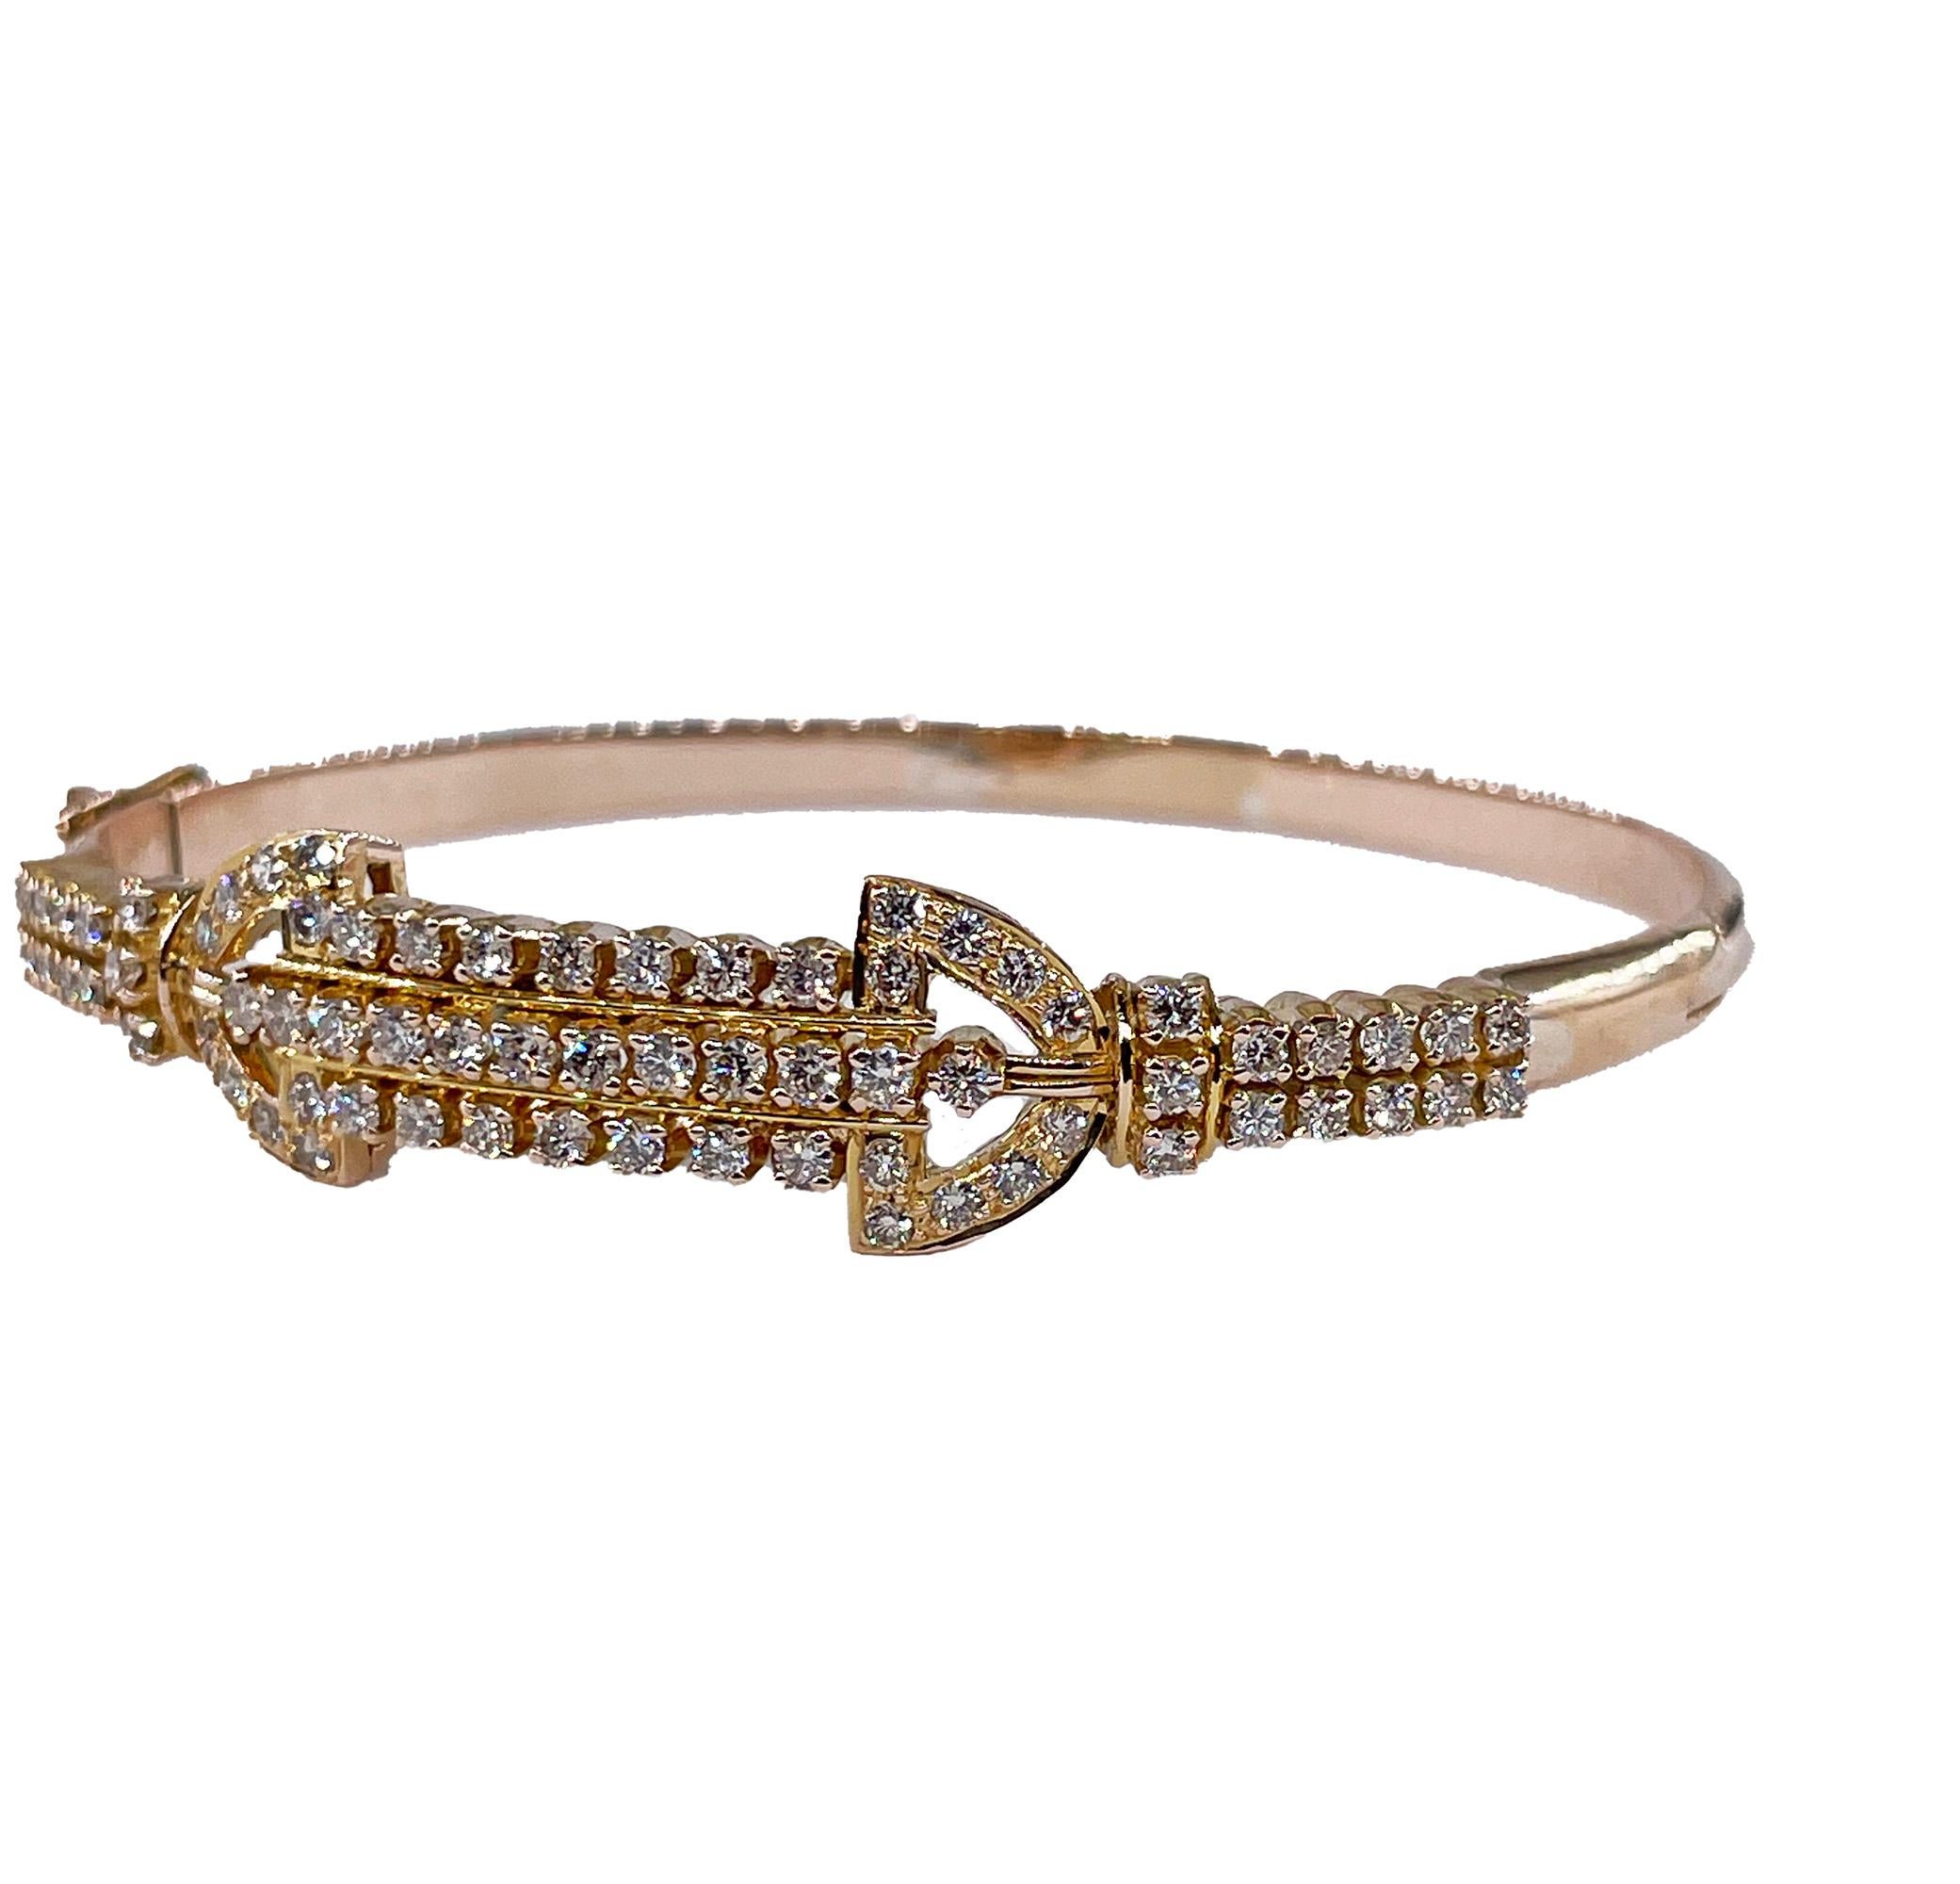 Late Art Deco Early Retro 1.50ctw Diamond Hinged 18K Gold Vintage Bangle Bracelet , Circa 1937

History reborn in shimmering Gold, this diamond bracelet bridges the gap between 1937's Art Deco and the future's Retro flair. Bridging eras in sparkling